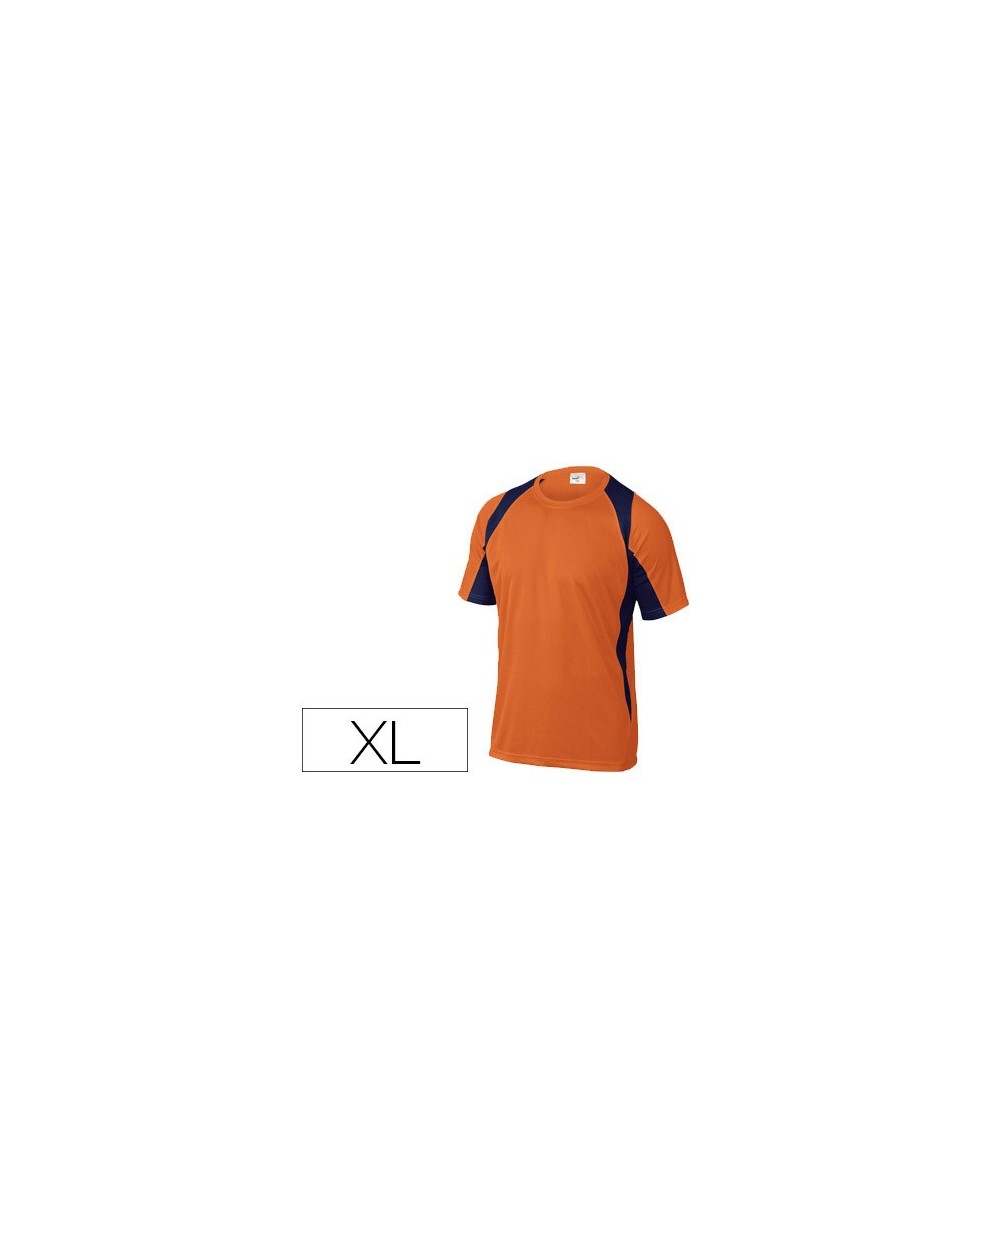 Camiseta deltaplus poliester manga corta cuello redondo tratamiento secado rapido color naranja marino talla xl